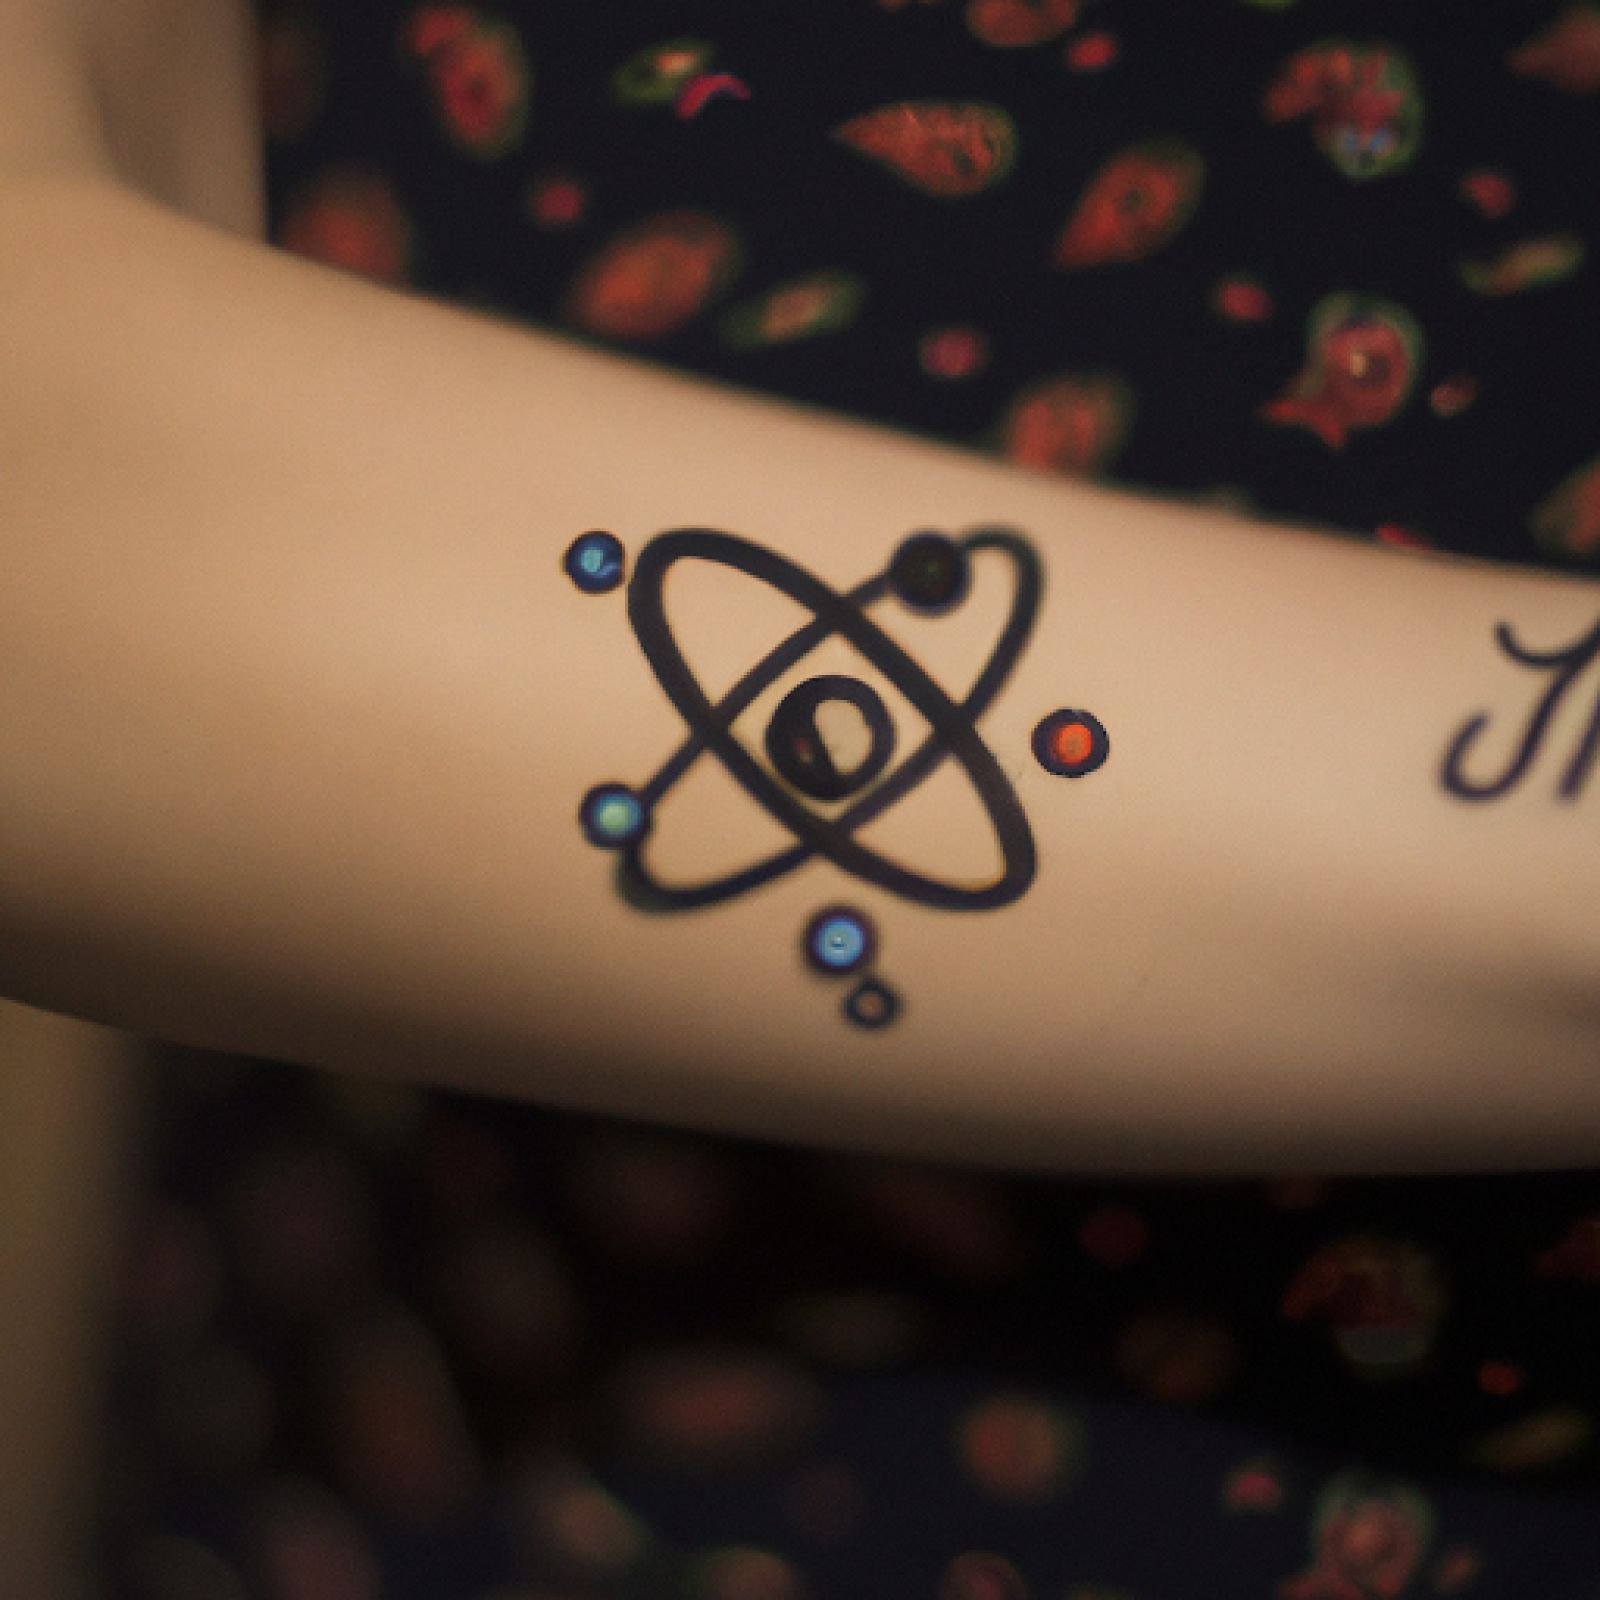 Atom tattoo on arm for women